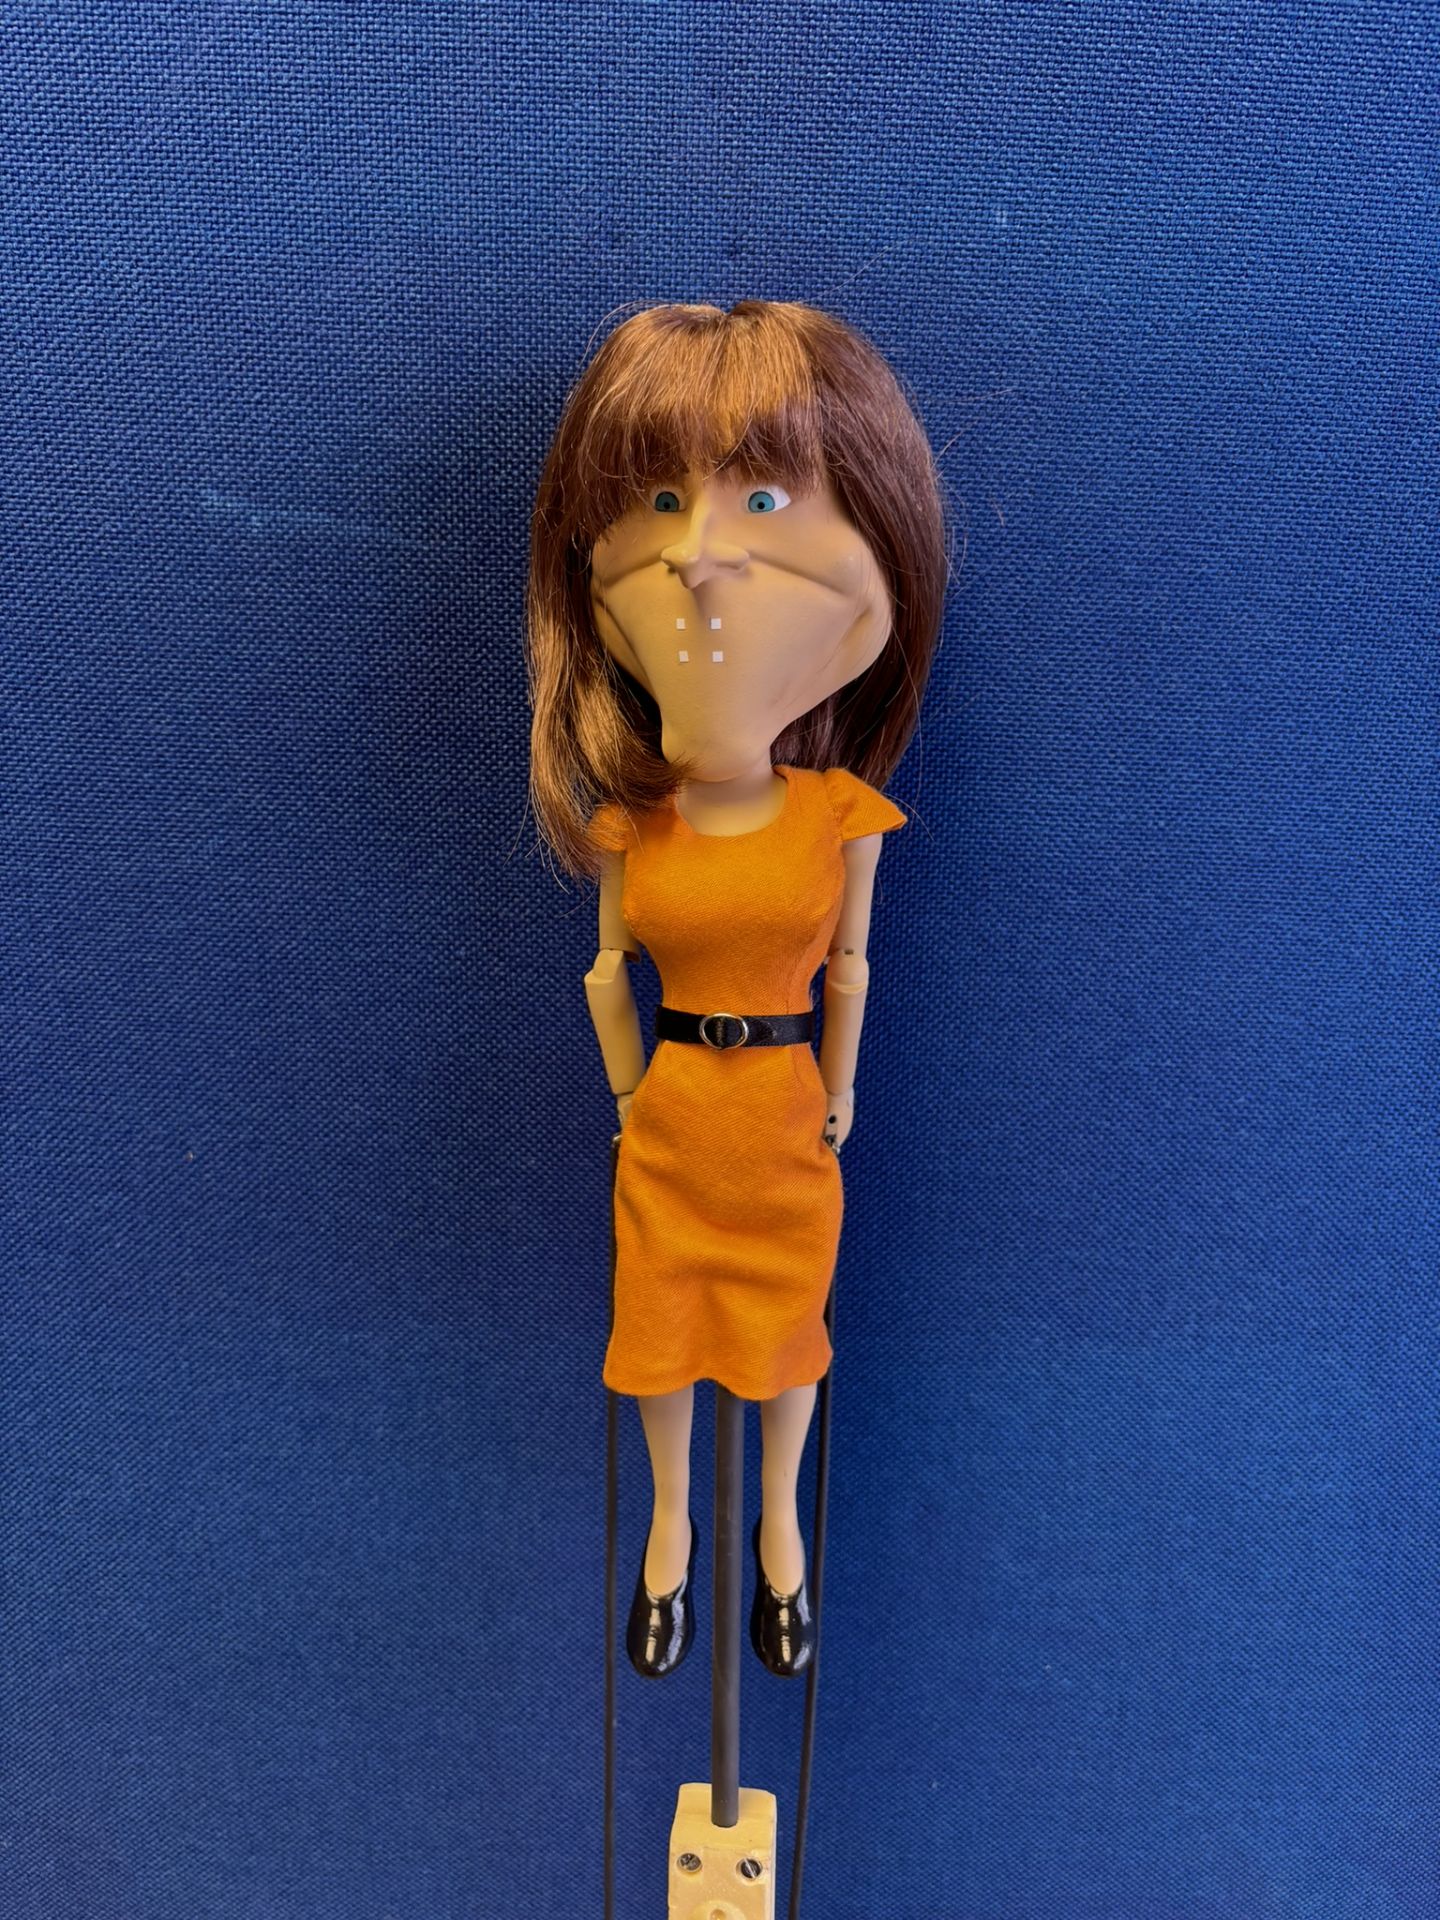 Newzoid puppet - Kay Burley - Image 2 of 3